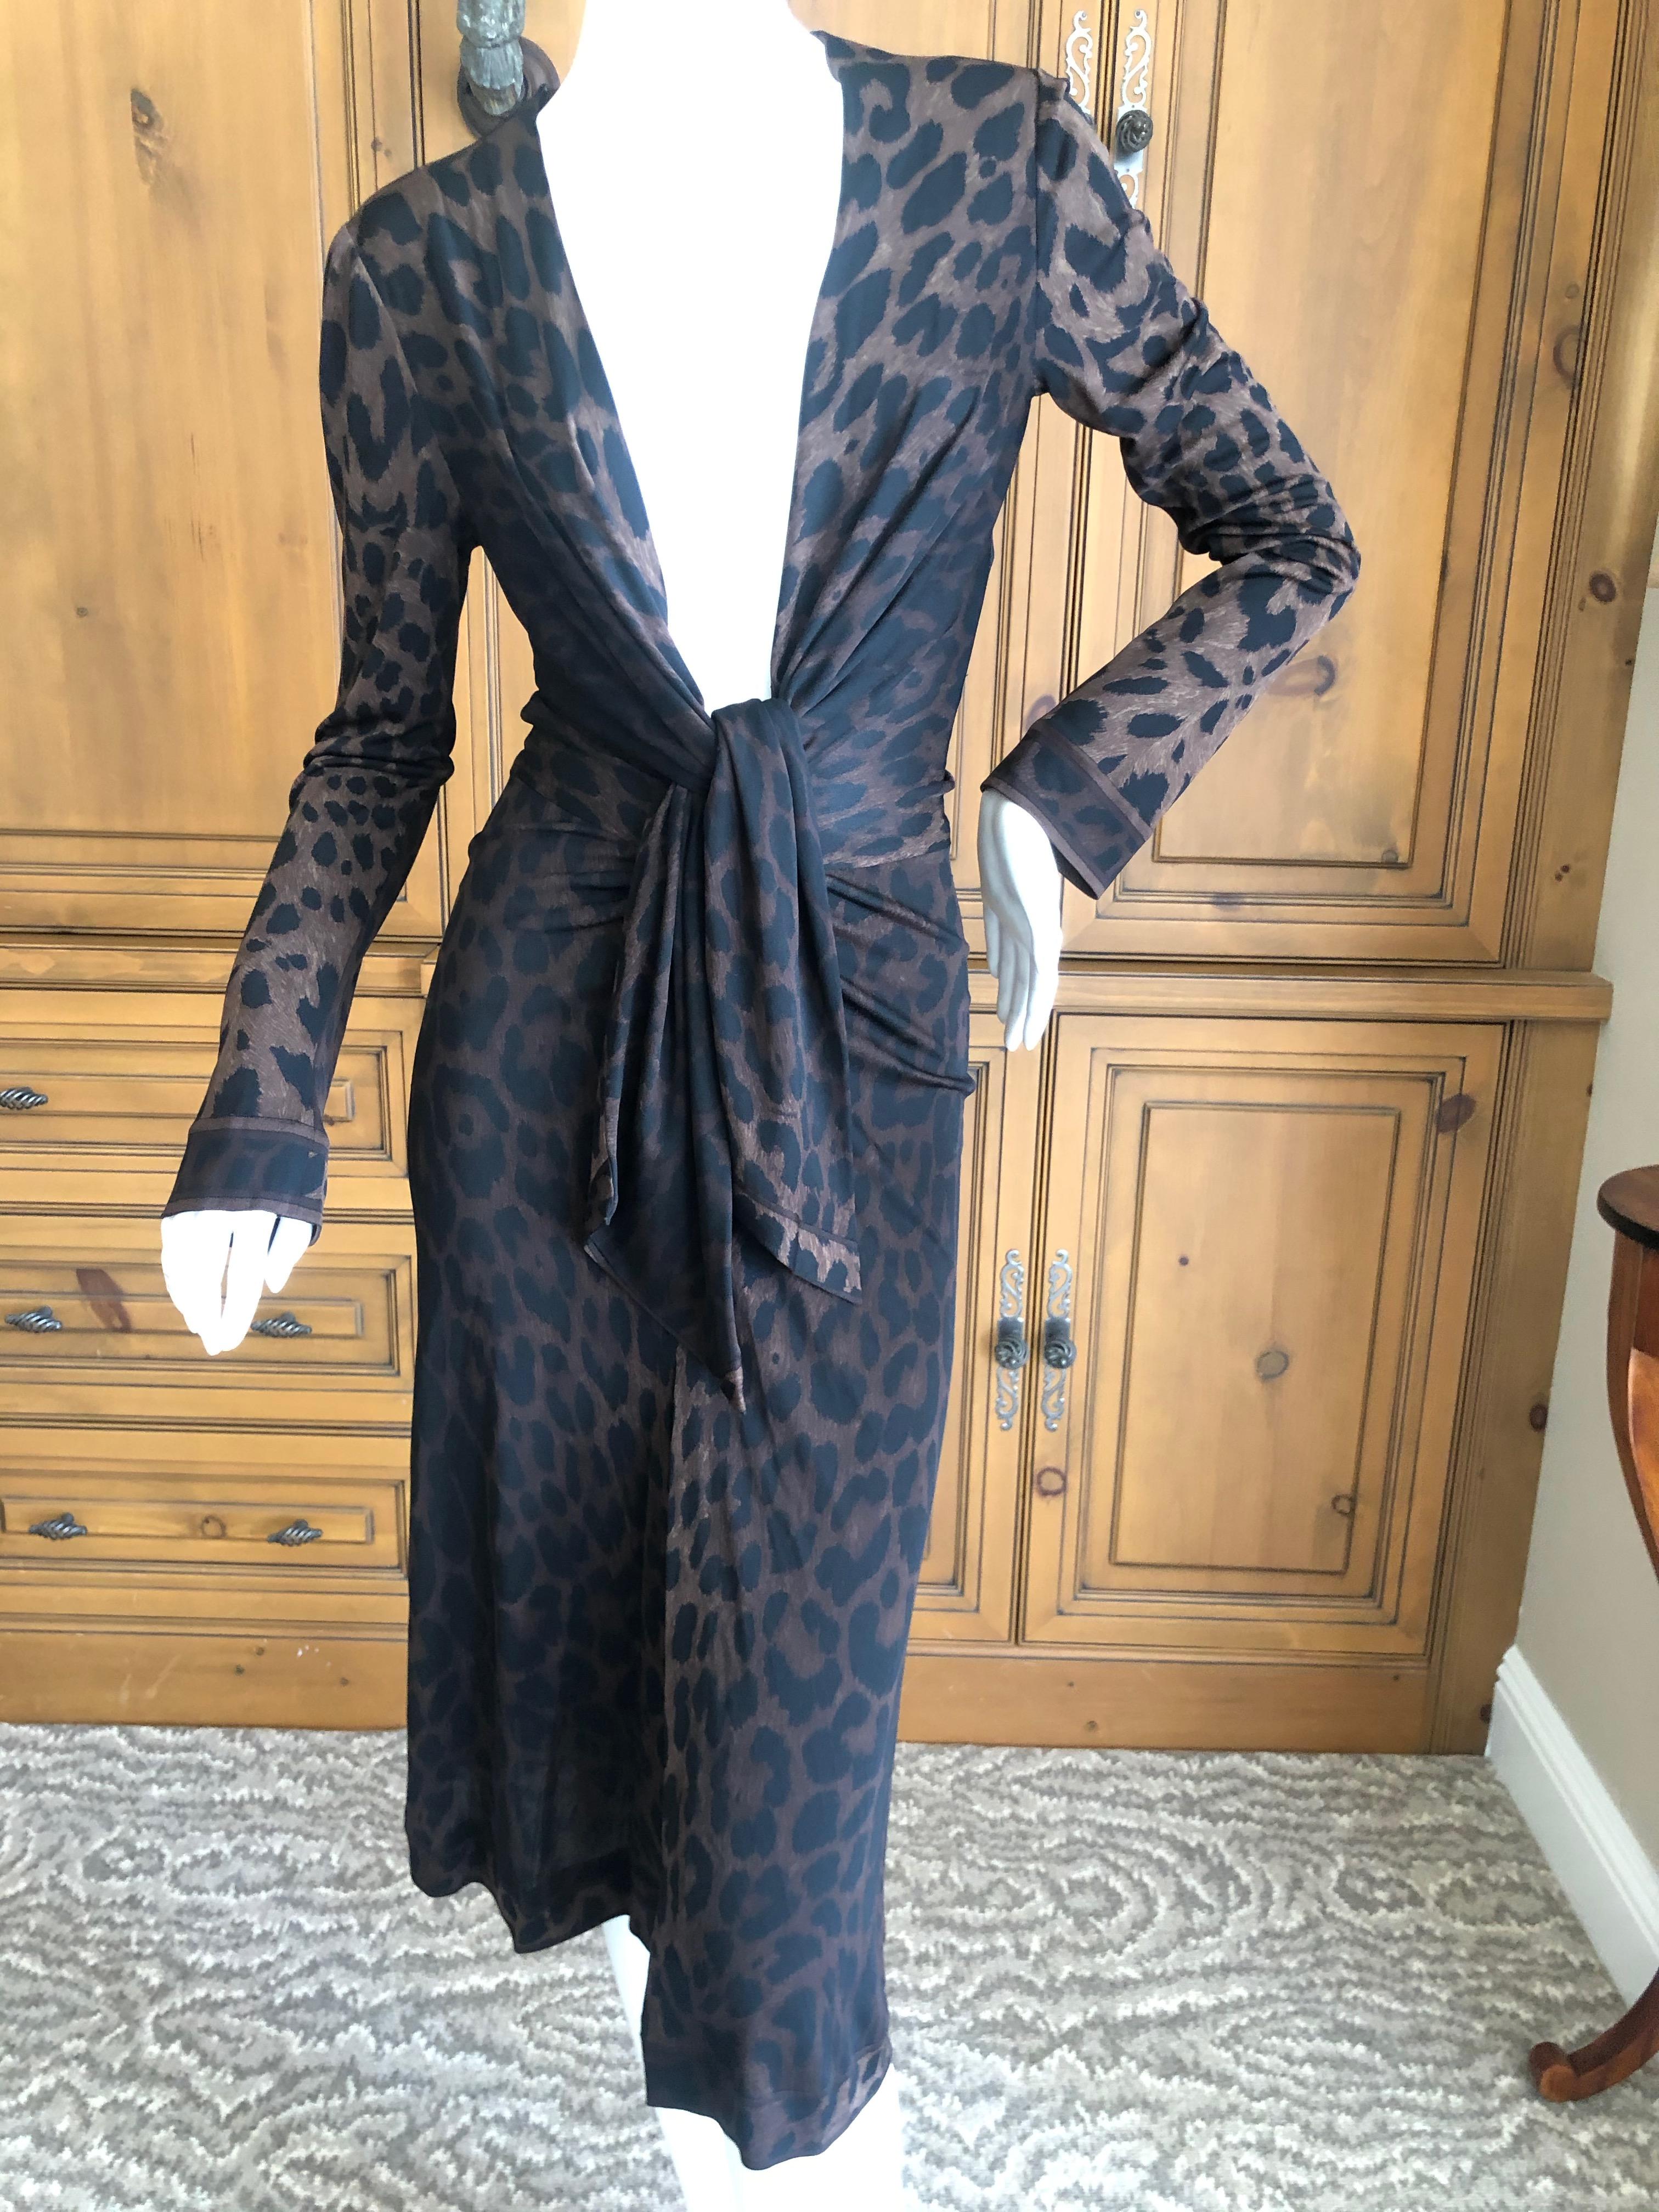 Leonard Paris Silk Jersey Vintage Low Cut Leopard Print Cocktail Dress In Excellent Condition For Sale In Cloverdale, CA